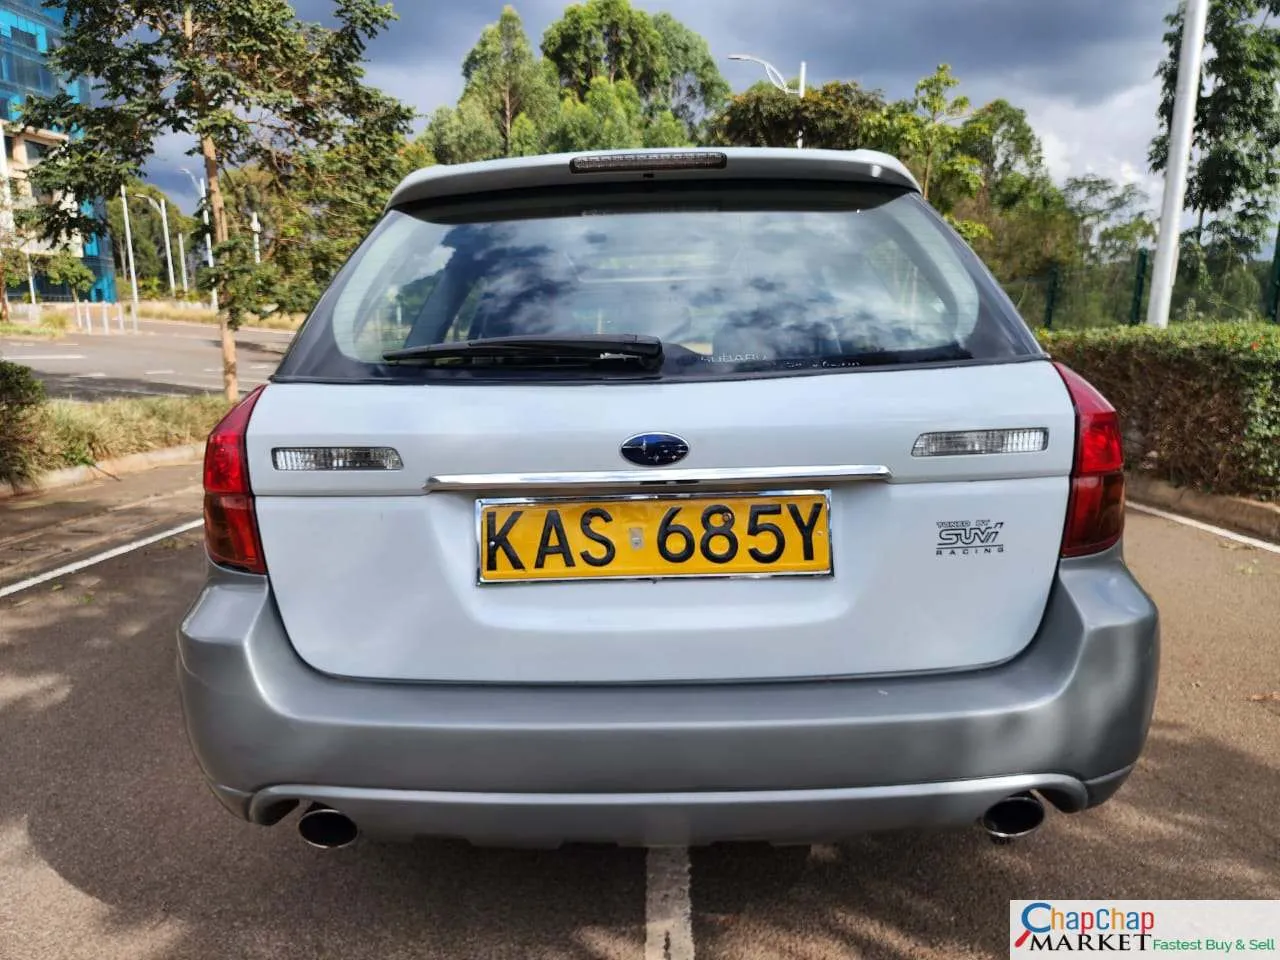 Subaru OUTBACK for sale in kenya LOCAL You Pay 30% Deposit Trade in Ok Subaru outback kenya